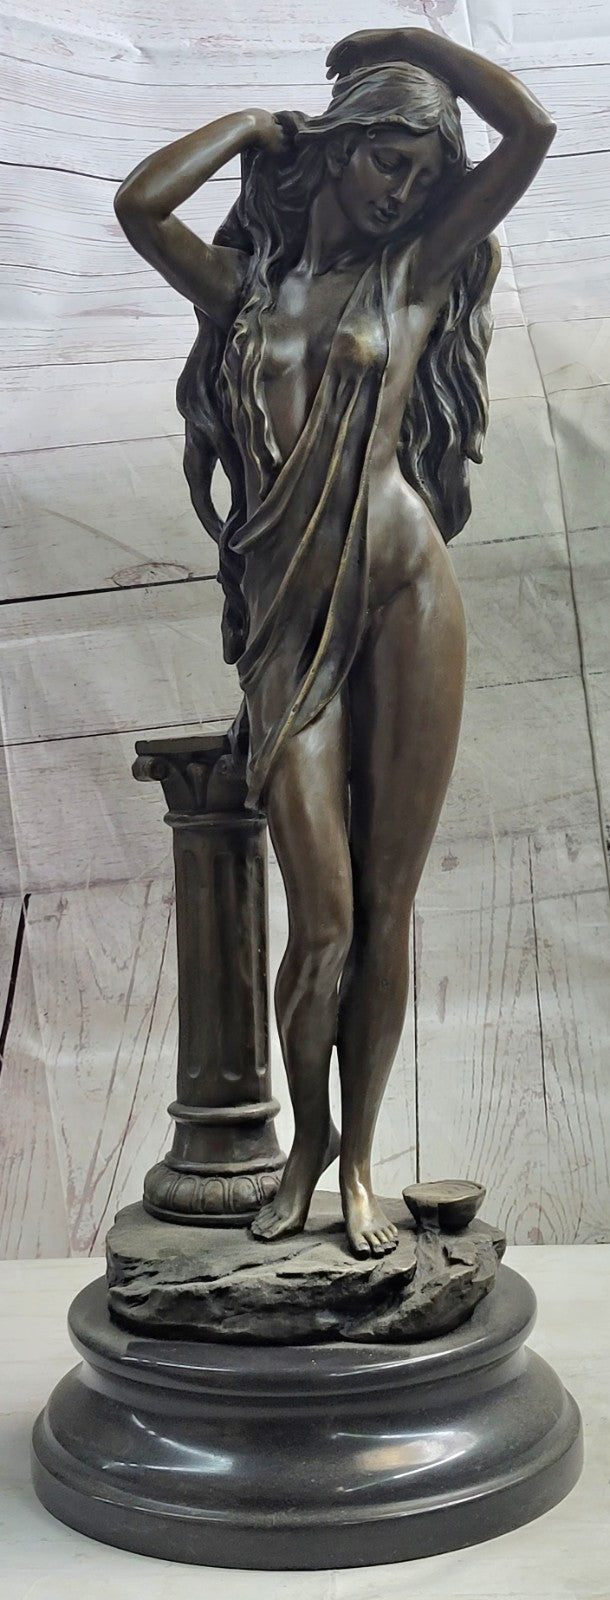 Aldo Vitaleh Art Deco Bronze Statue - Alluring Woman Sculpture, Signed Original